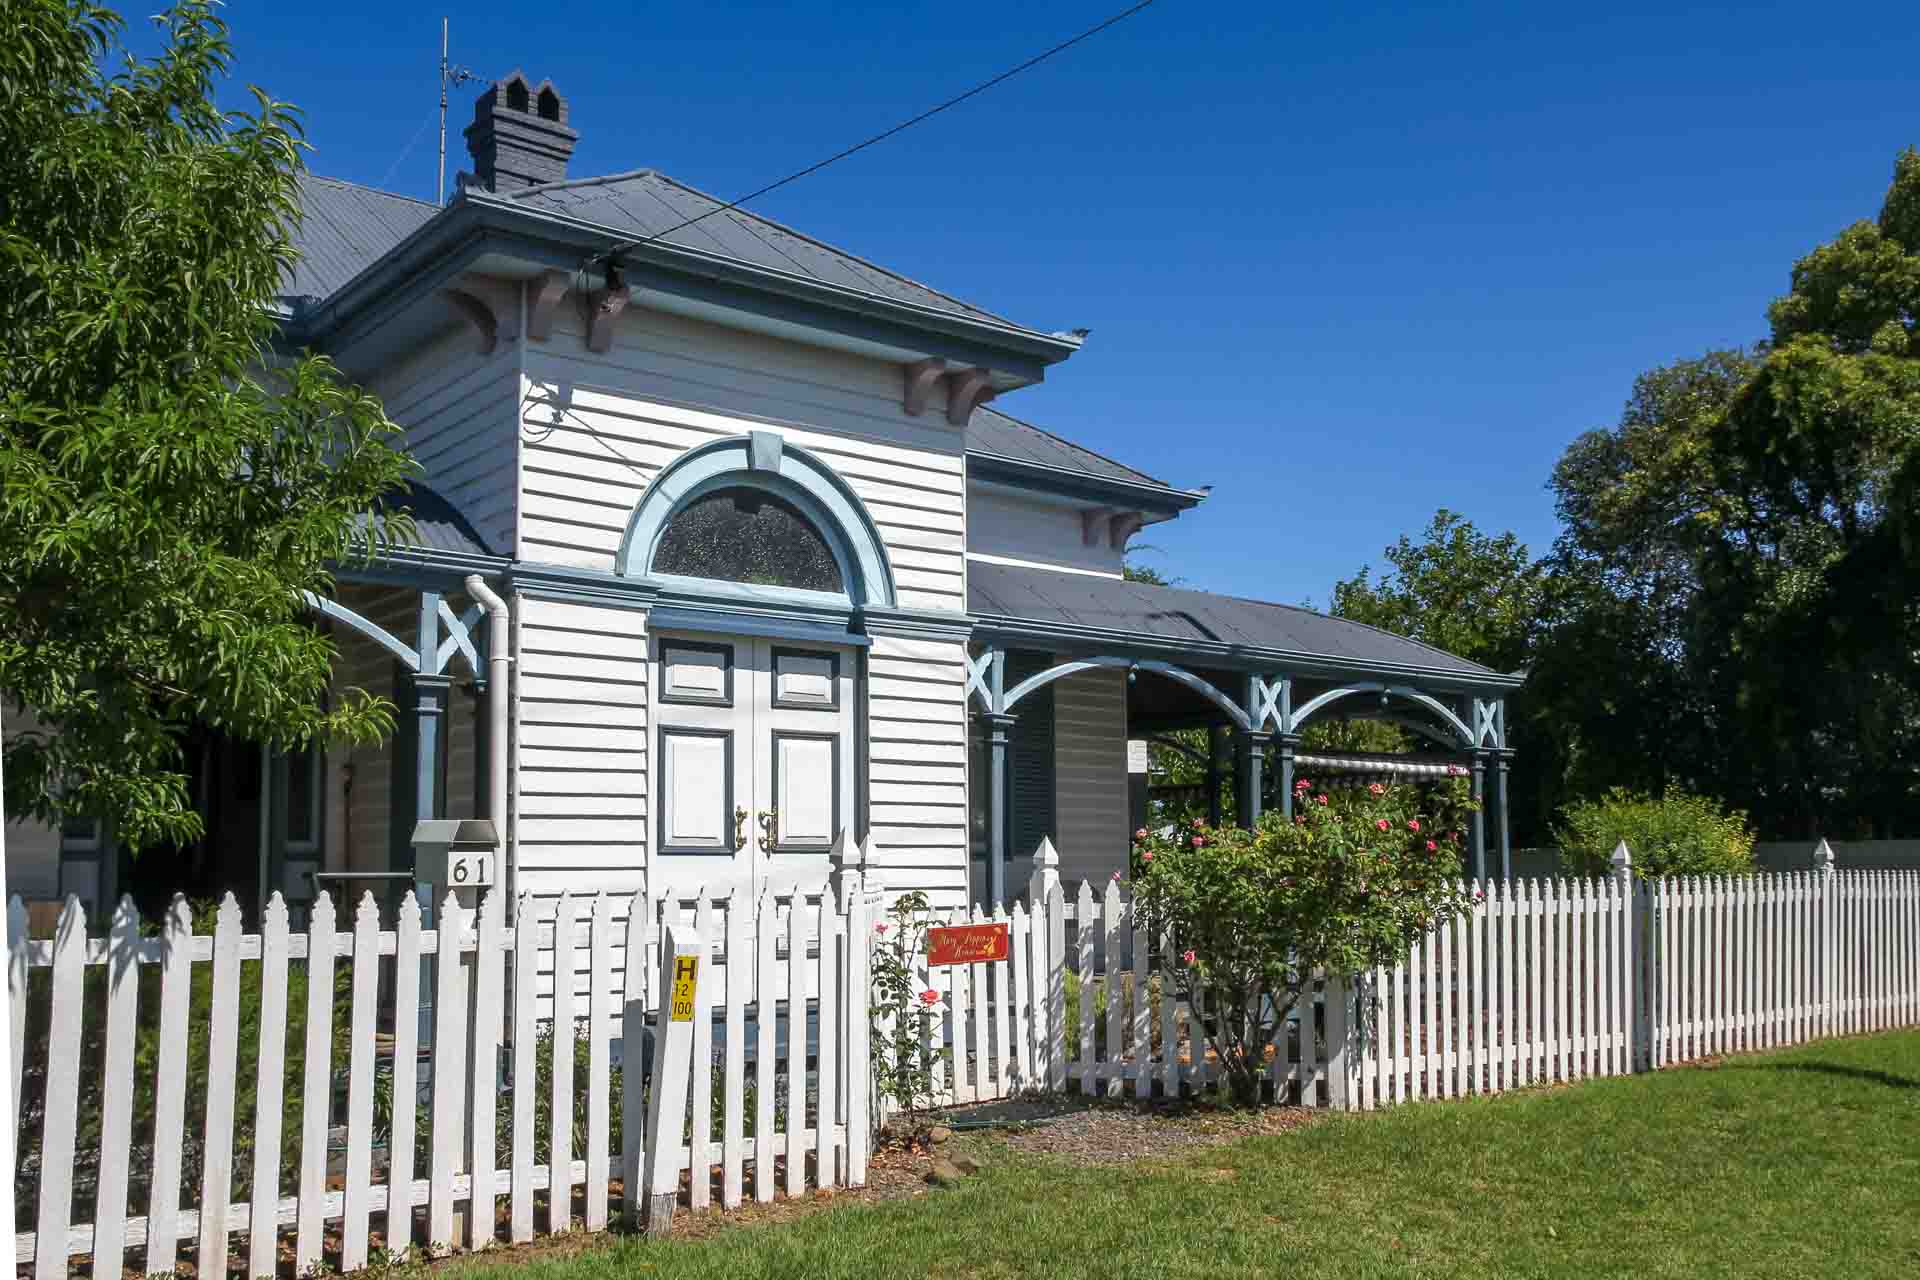 Mary Poppins House, Allora, Queensland, Australia